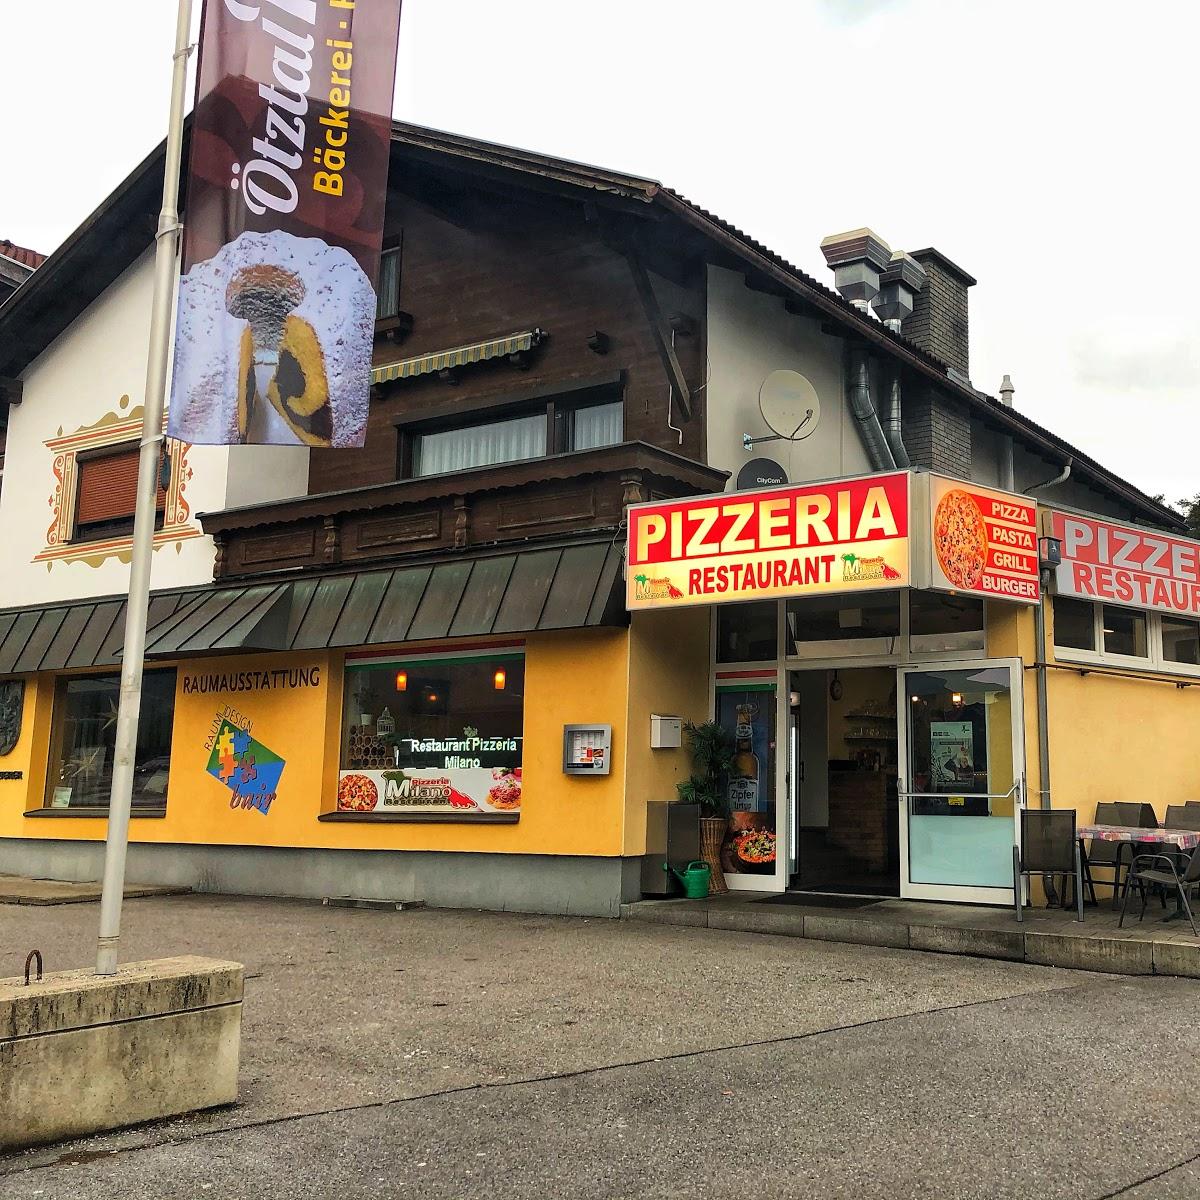 Restaurant "Pizzeria Milano" in Ötztal Bahnhof